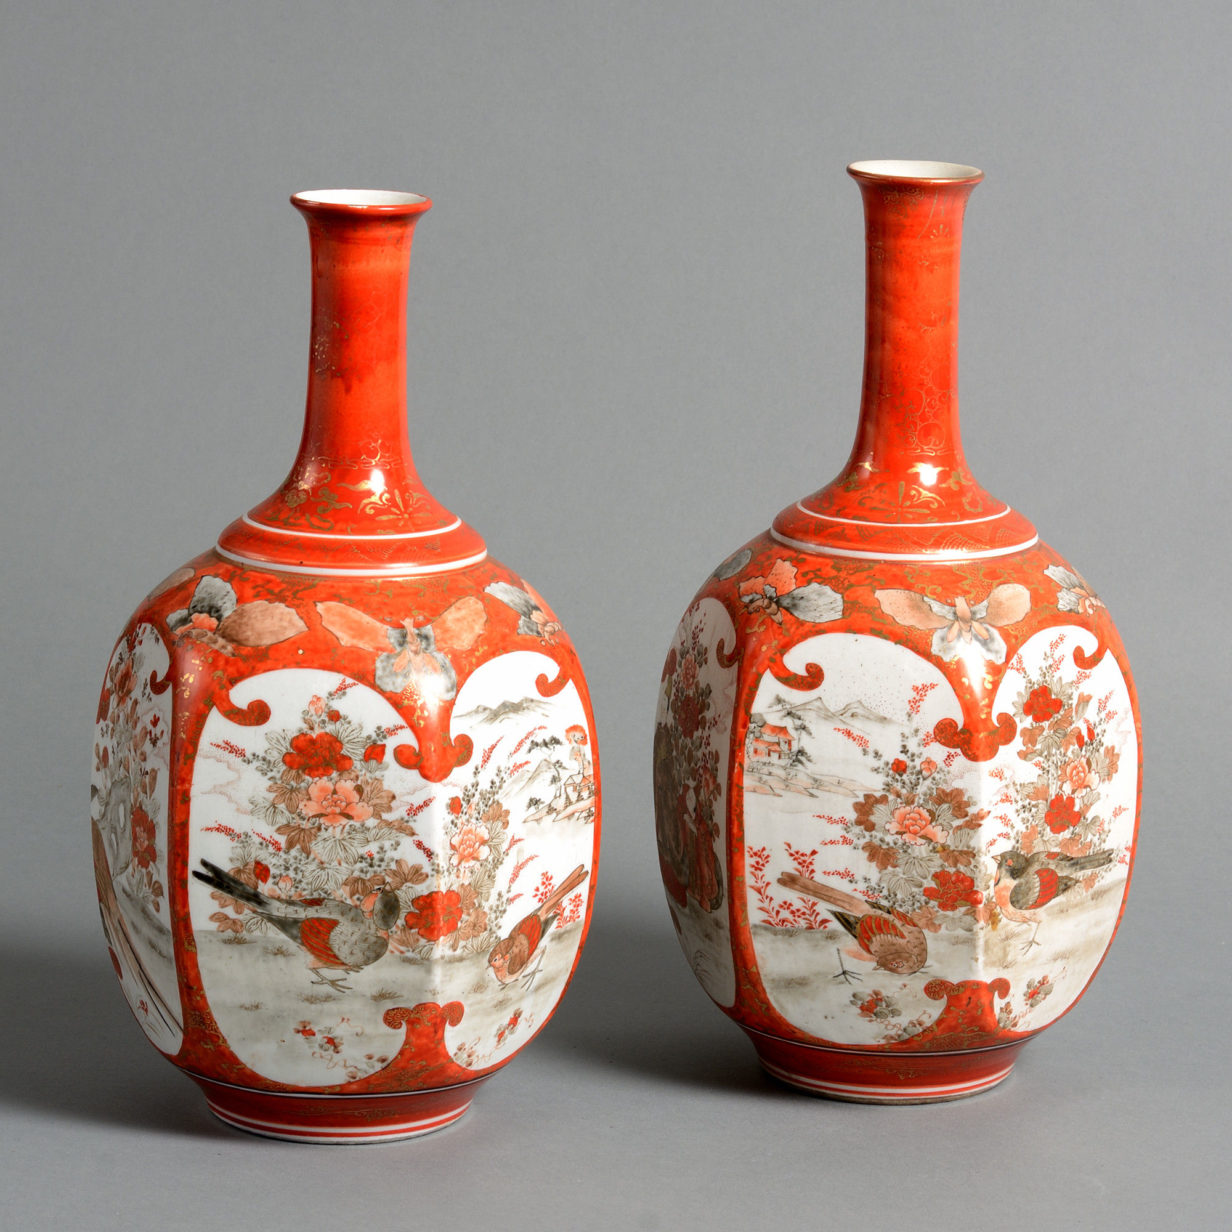 A 19th century pair of kutani porcelain bottle vases